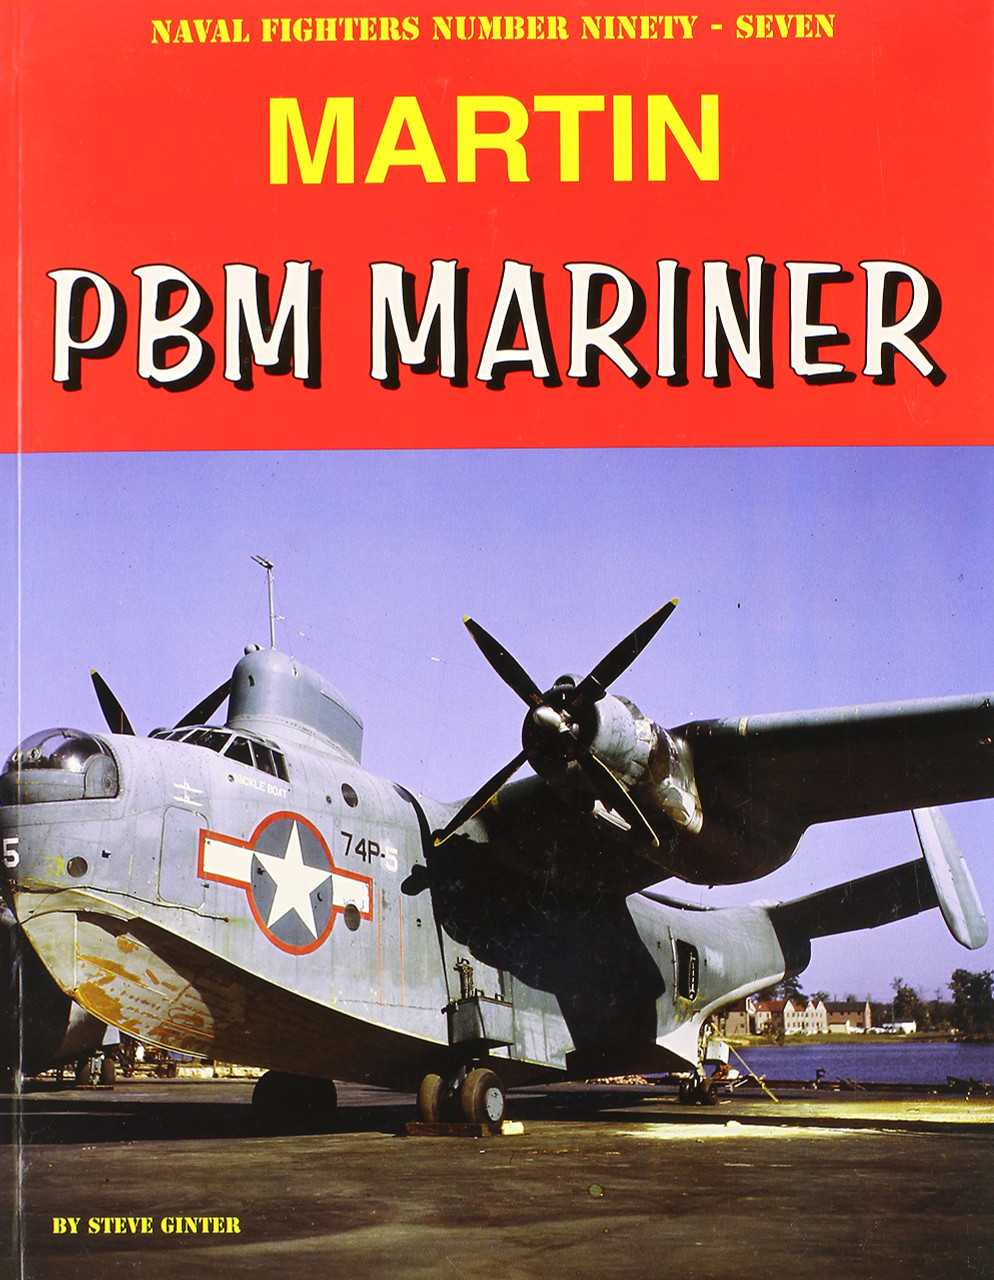 NF097 - Martin PBM Mariner